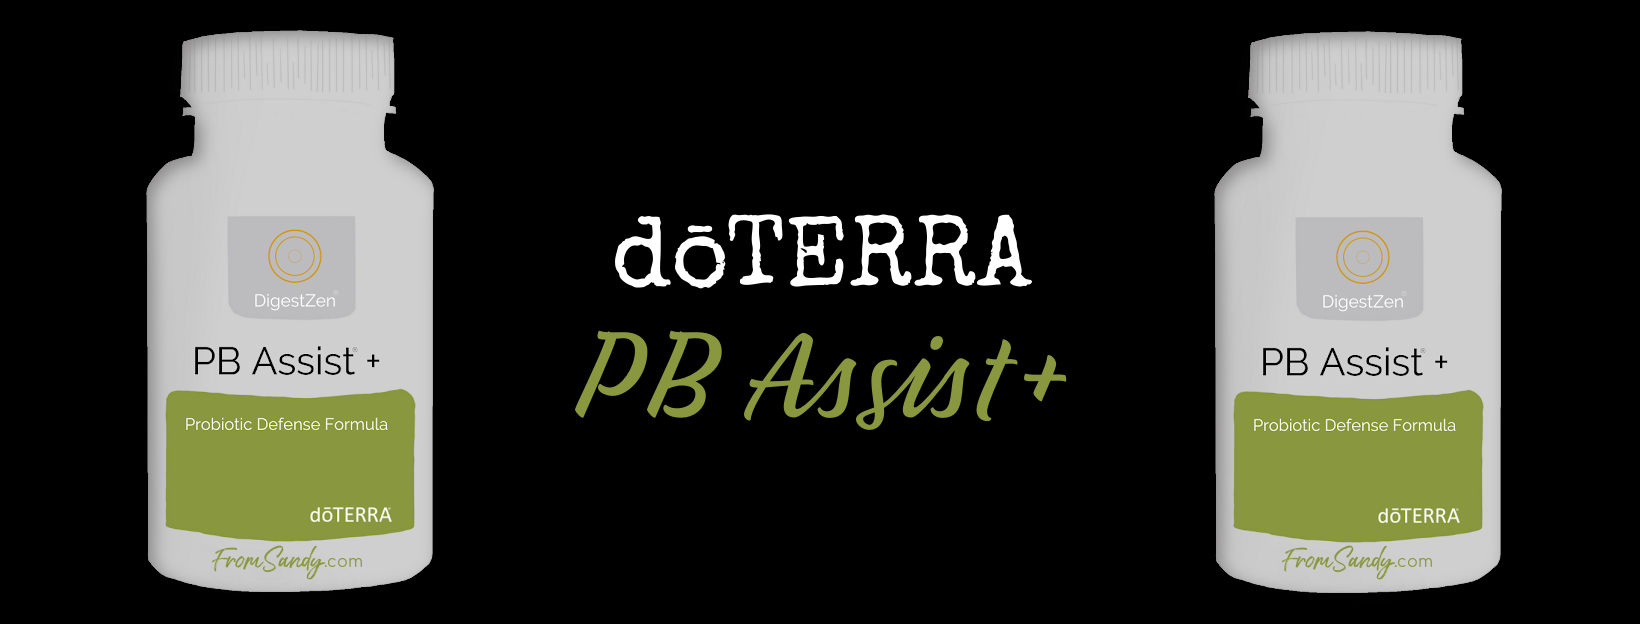 dōTERRA PB Assist+ | From Sandy